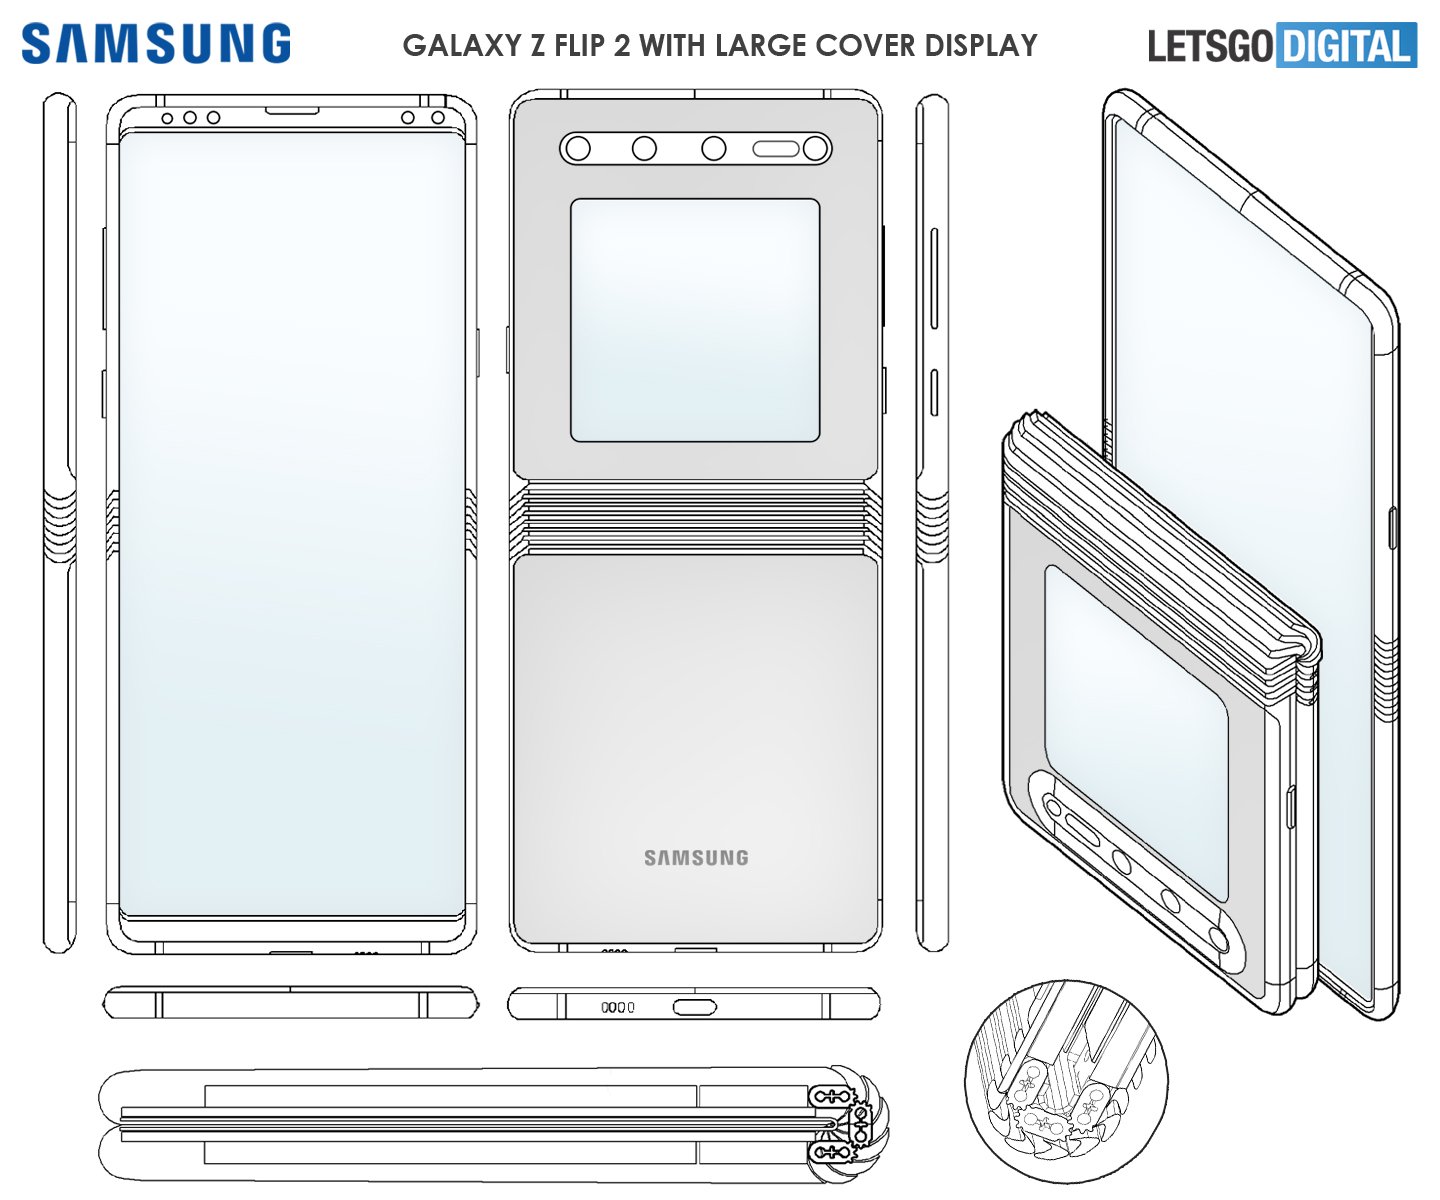 Samsung Clamshell Foldable Smartphone Design Patent Large Cover Display Triple Camera Zero Gap Hinge